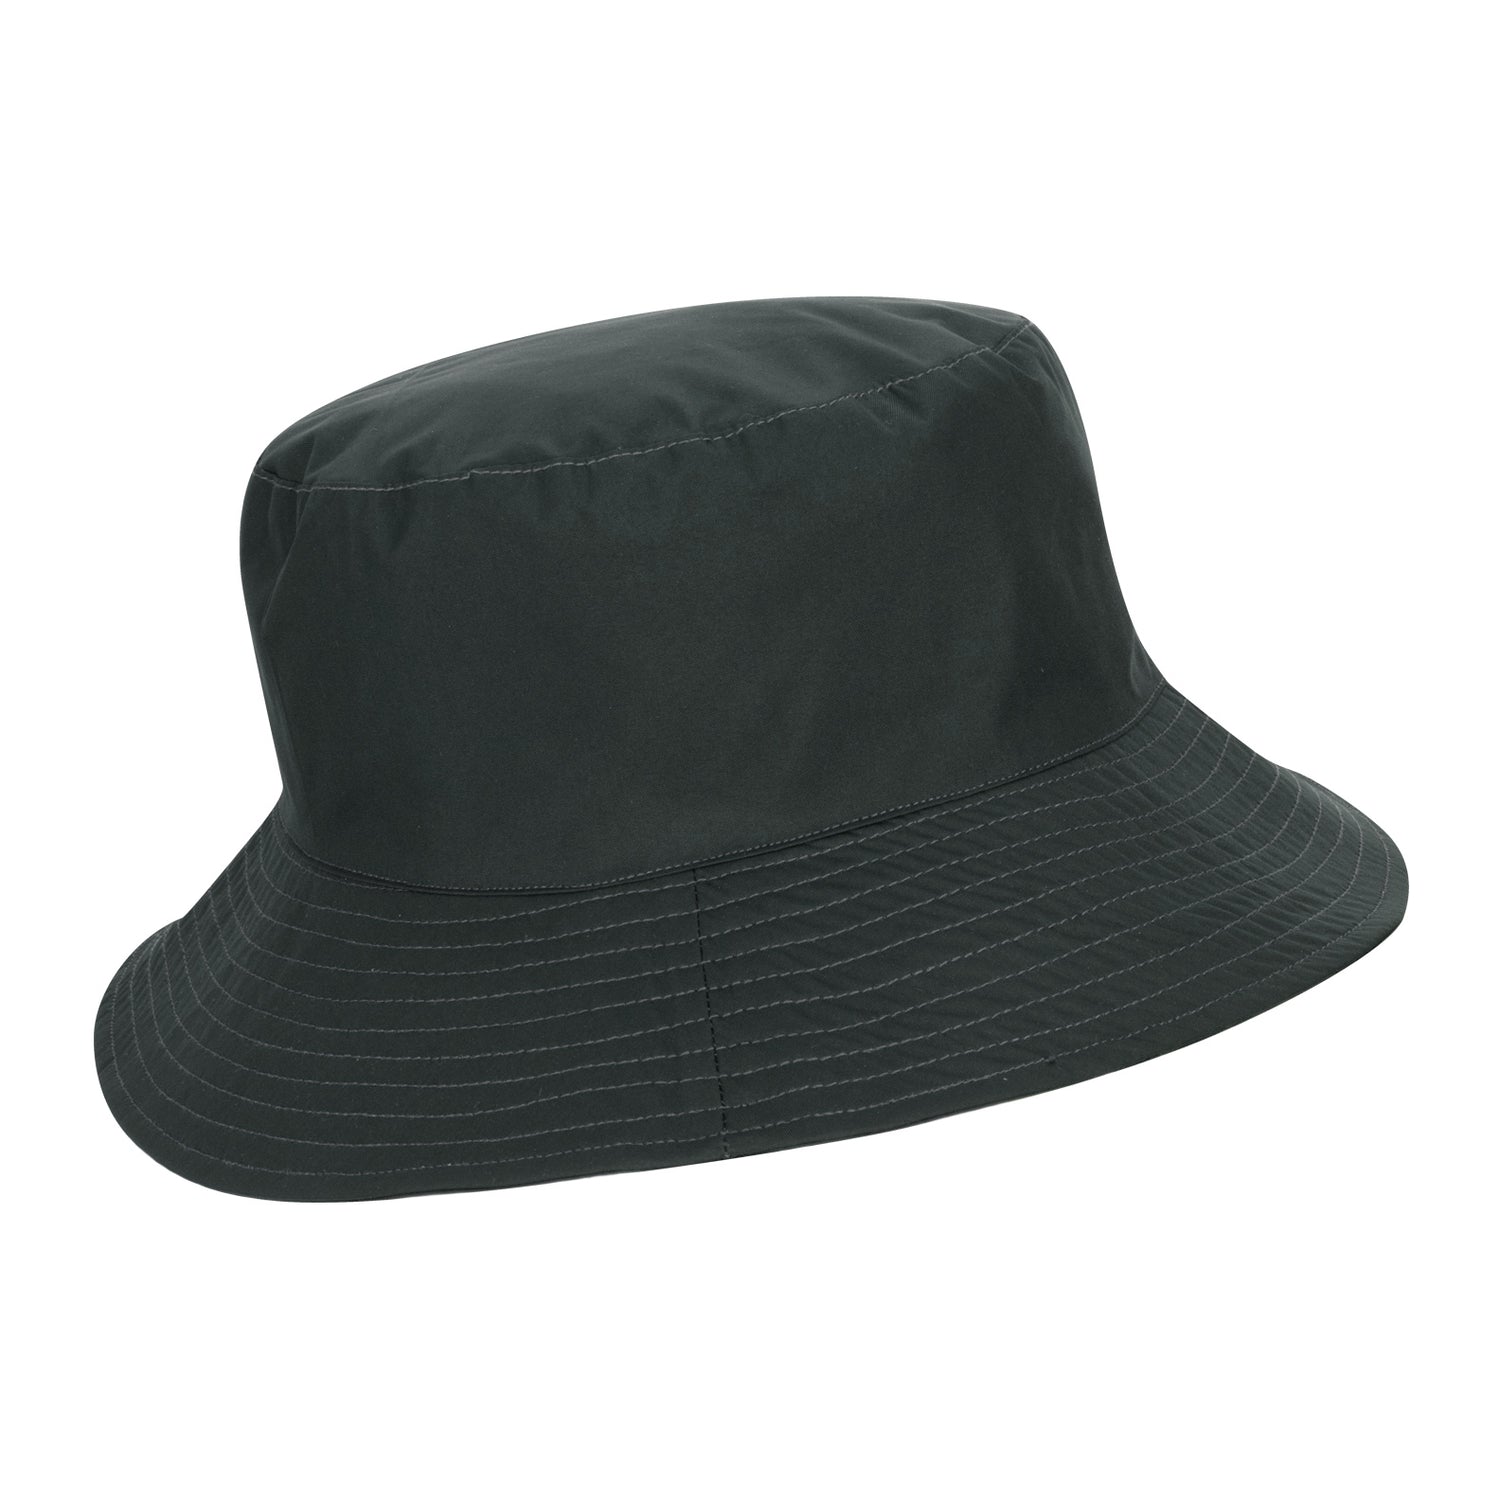 New-Forest-Victoria-Waterproof-Hat